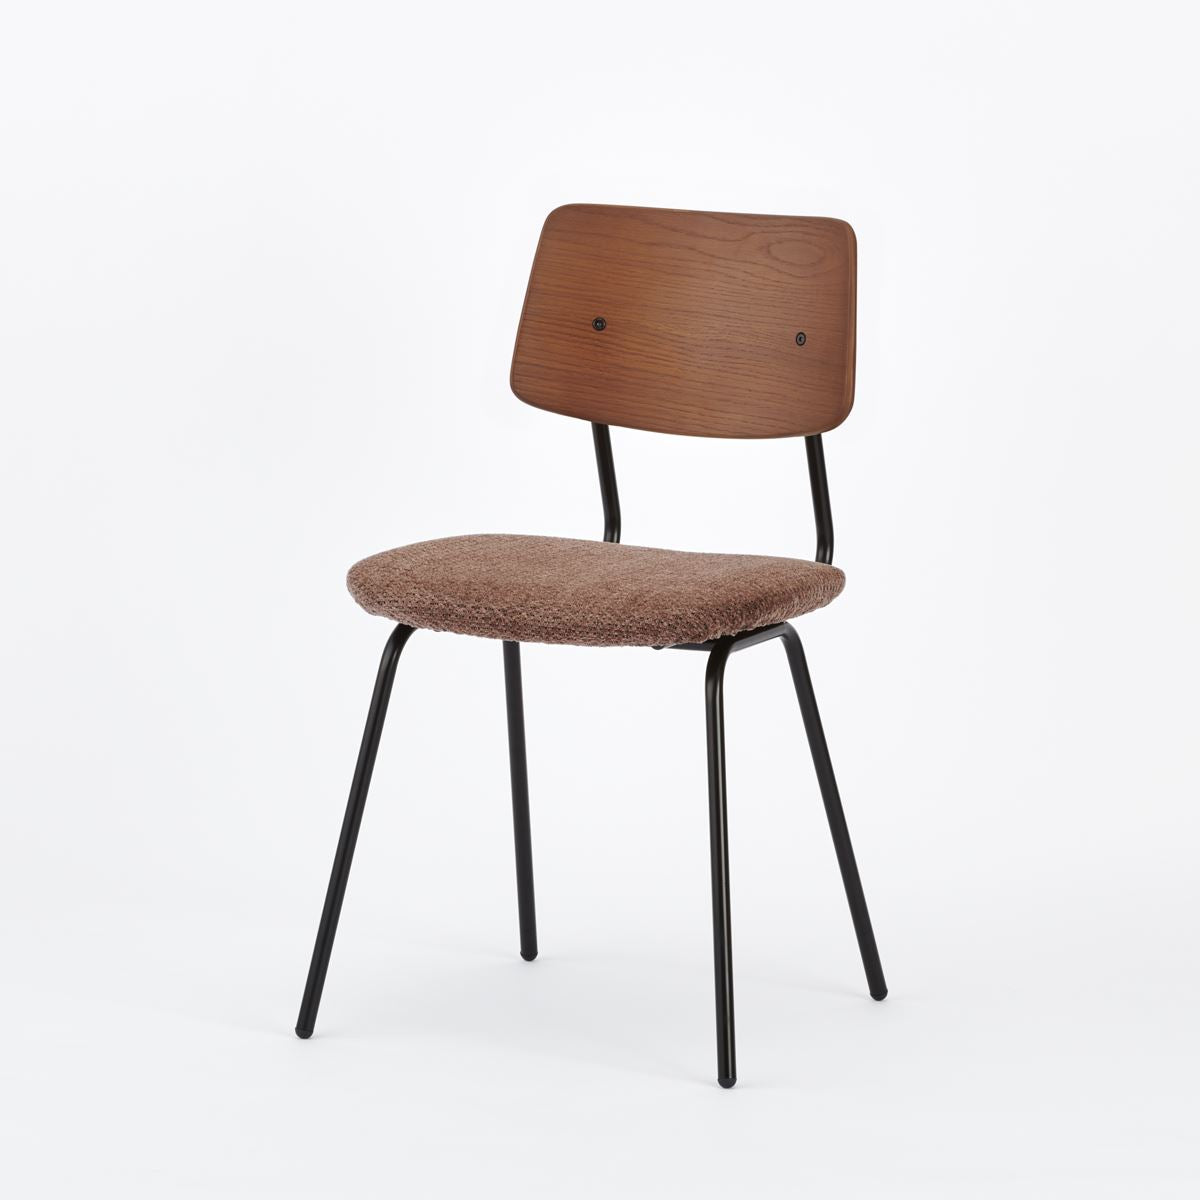 KUUM  Chair shikaku - Black Steel Frame/Cushion/Brown Back / クーム チェア シカク